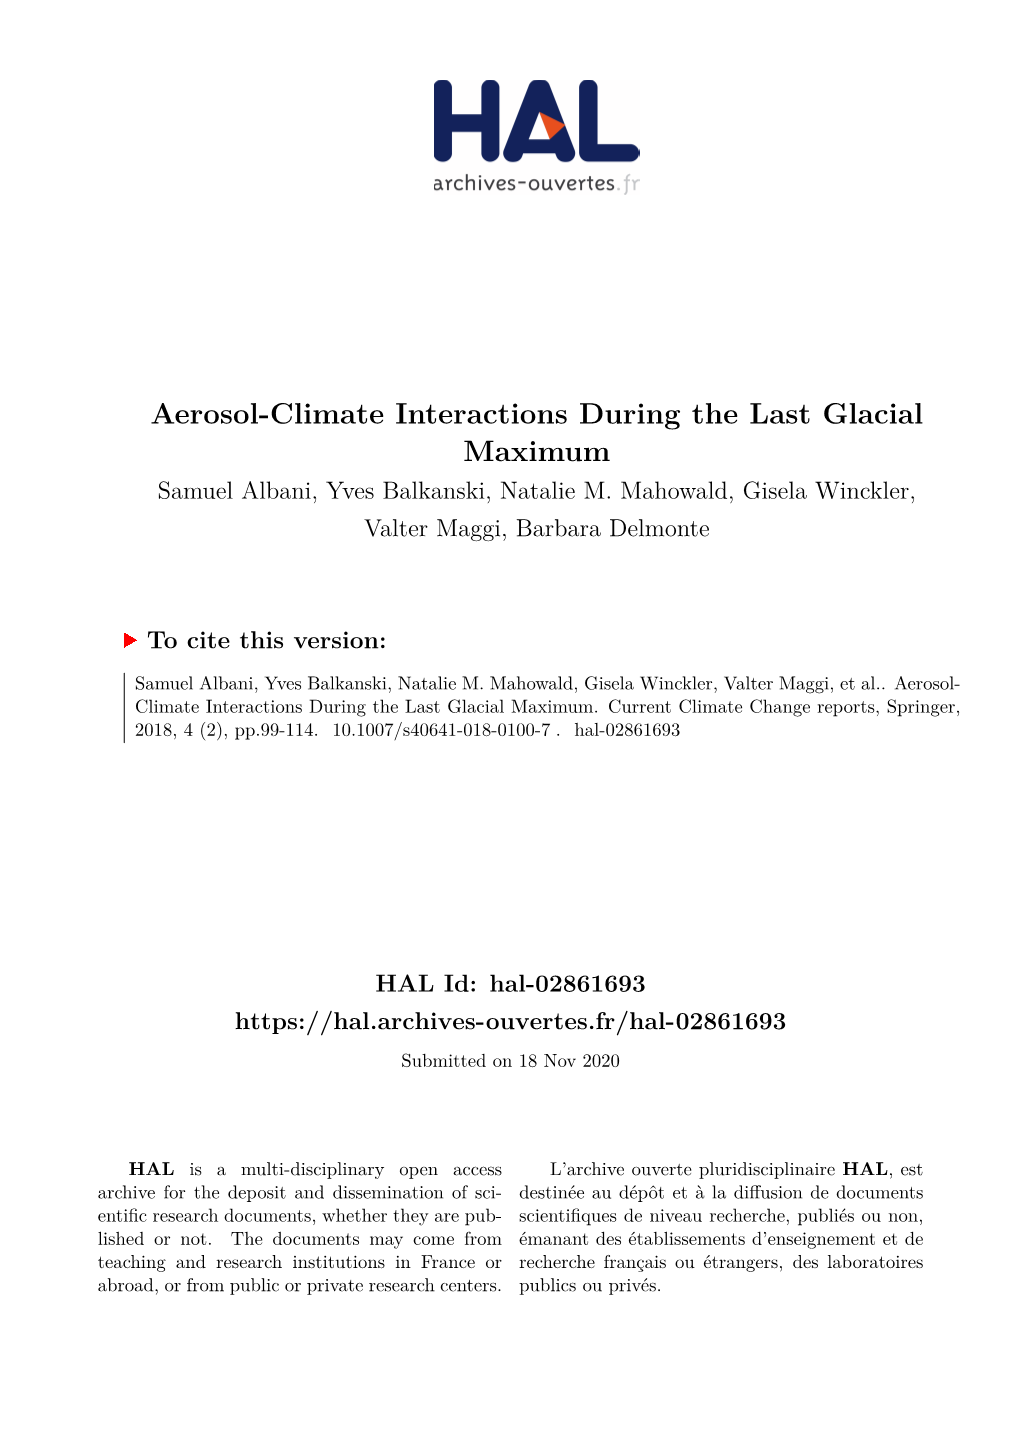 Aerosol-Climate Interactions During the Last Glacial Maximum Samuel Albani, Yves Balkanski, Natalie M